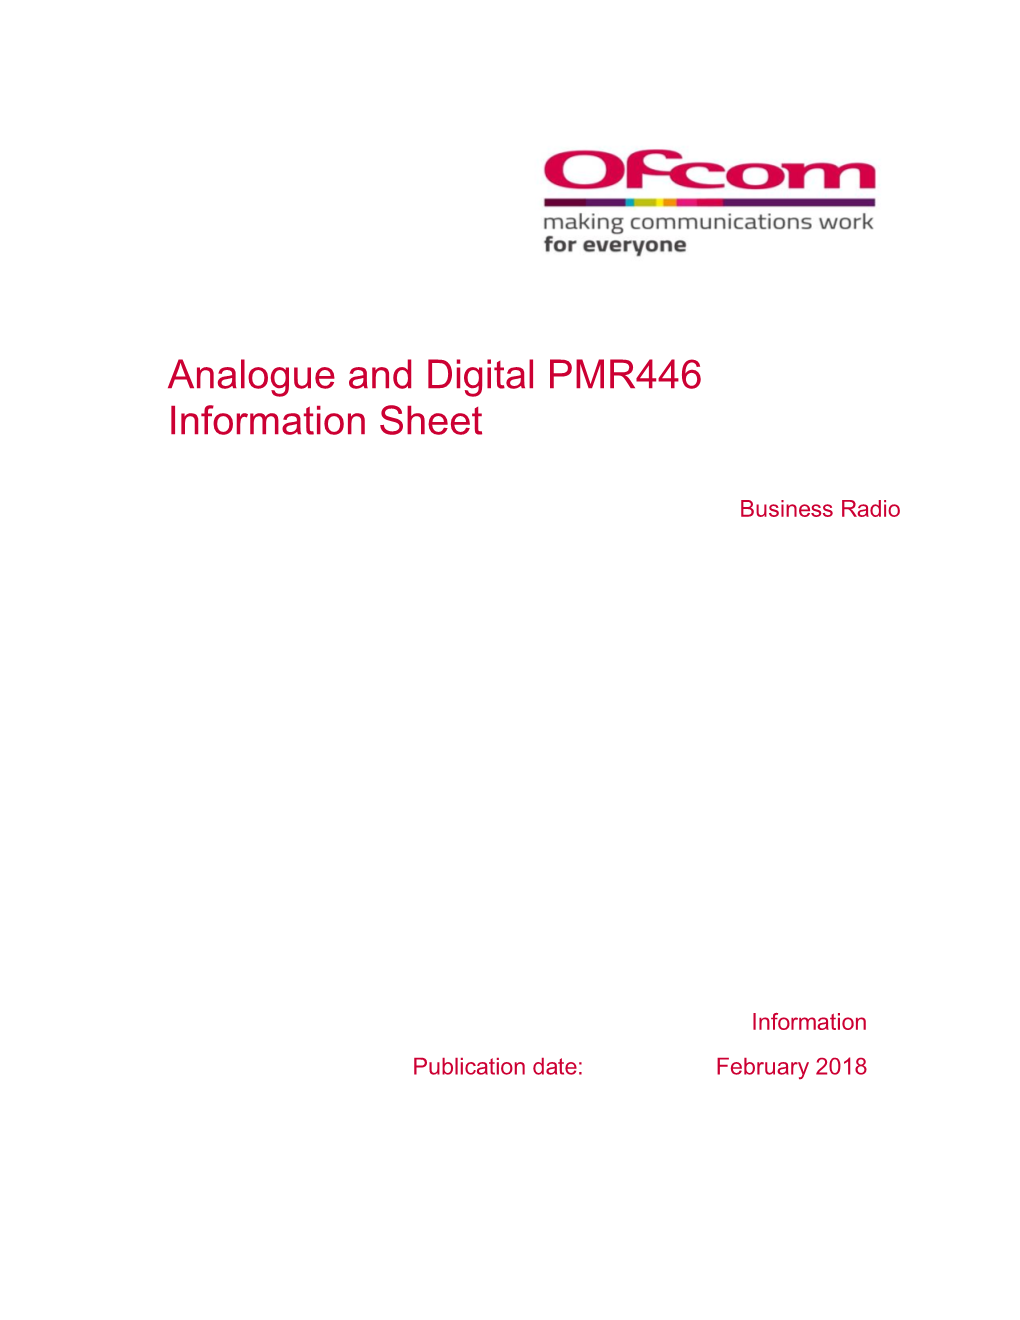 Analogue and Digital PMR446 Information Sheet